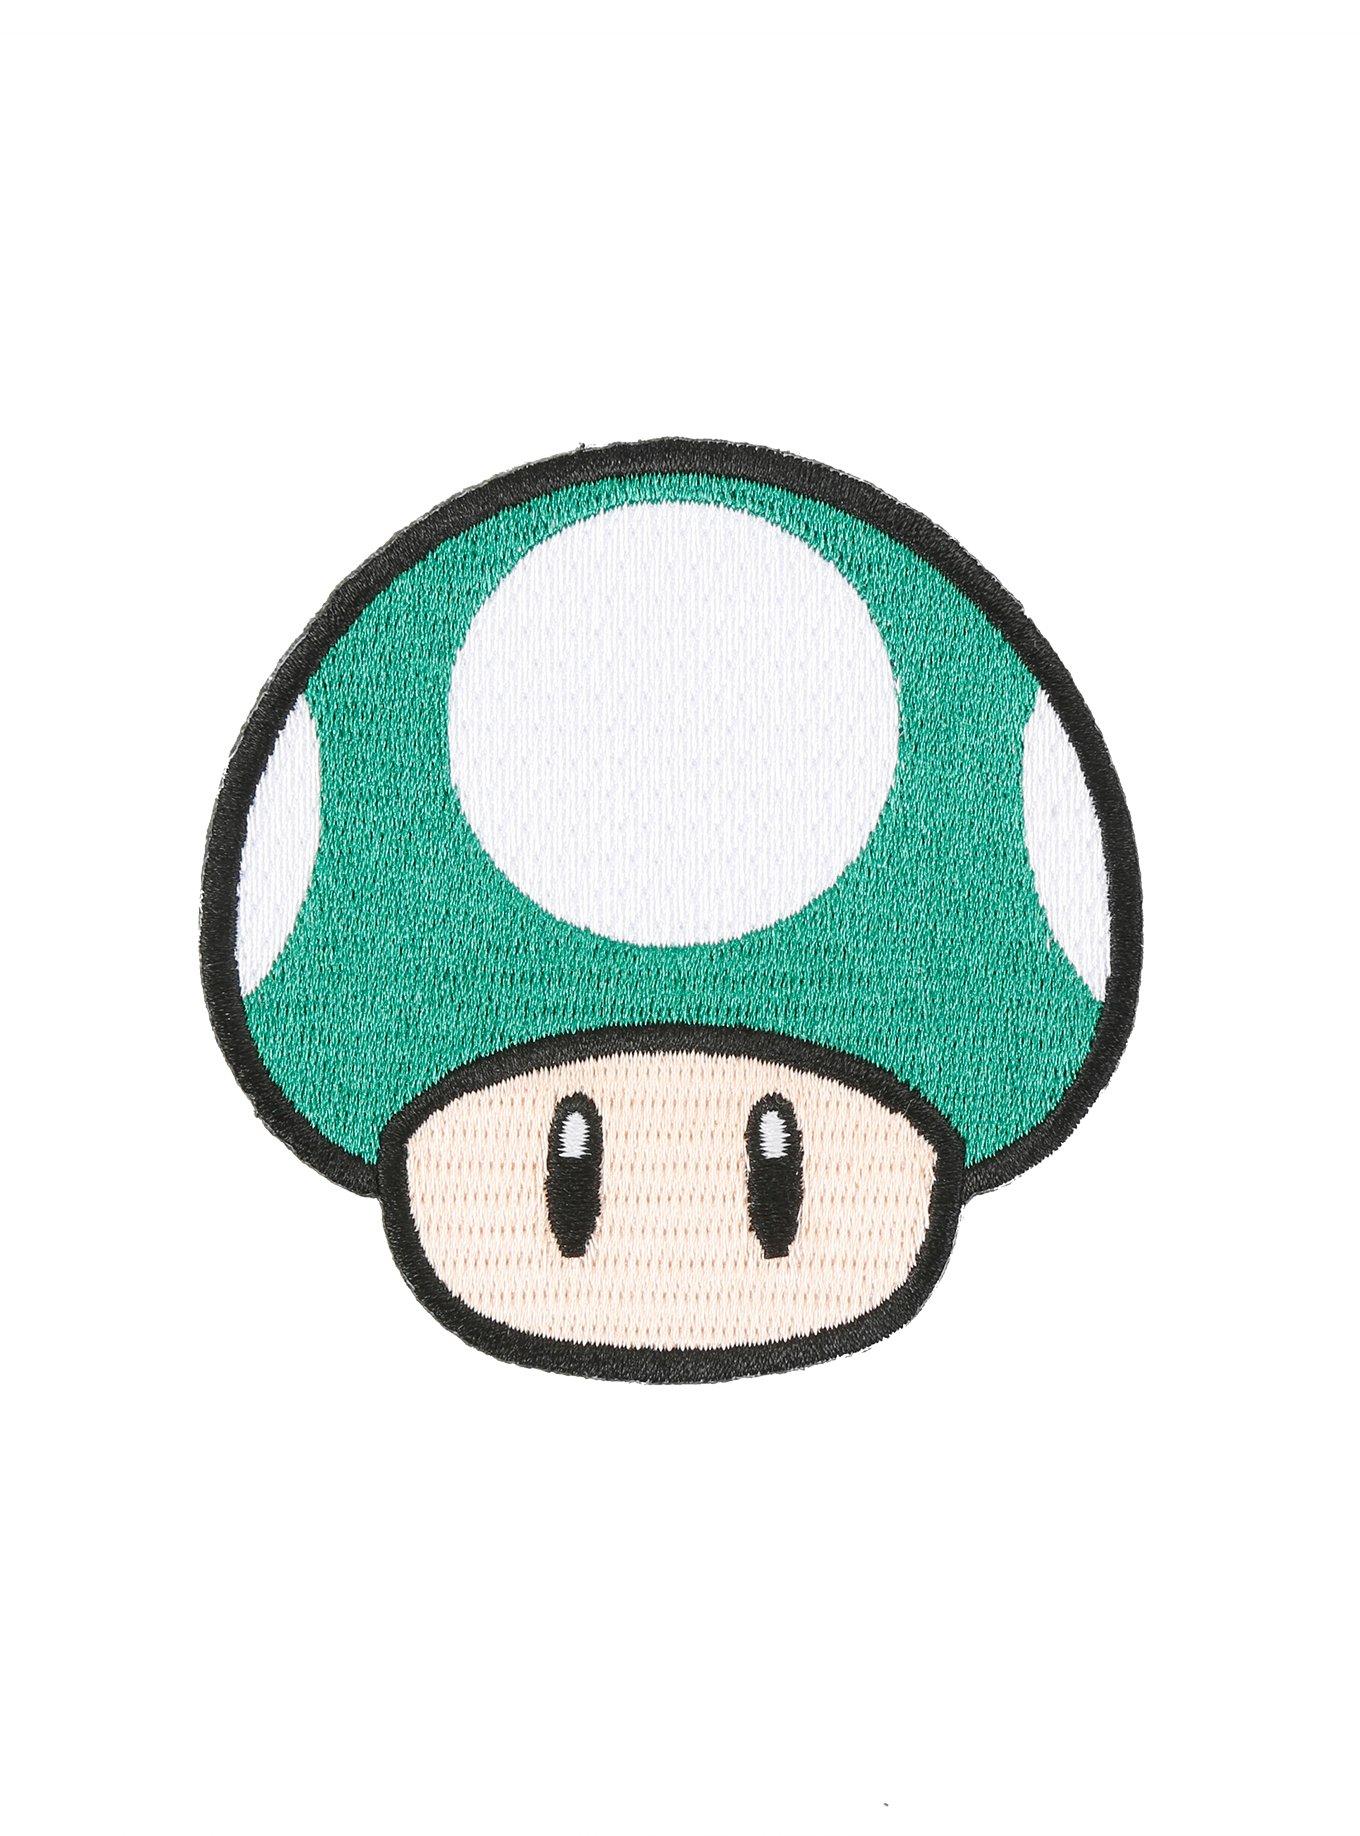 1 Up Mushroom, Mario Iron On Patch